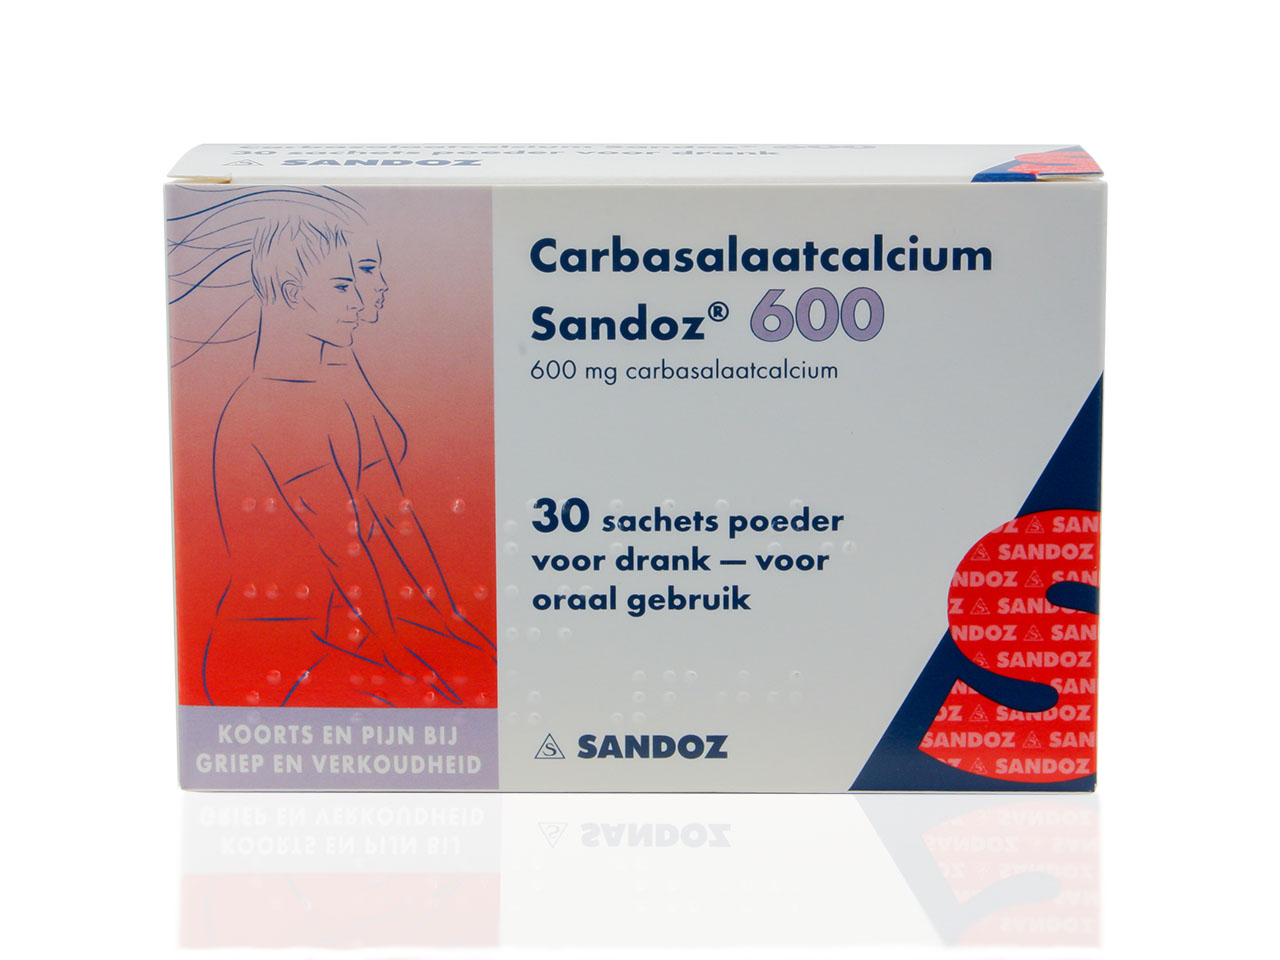 Carbasalaatcalcium Sandoz Sachet 600mg